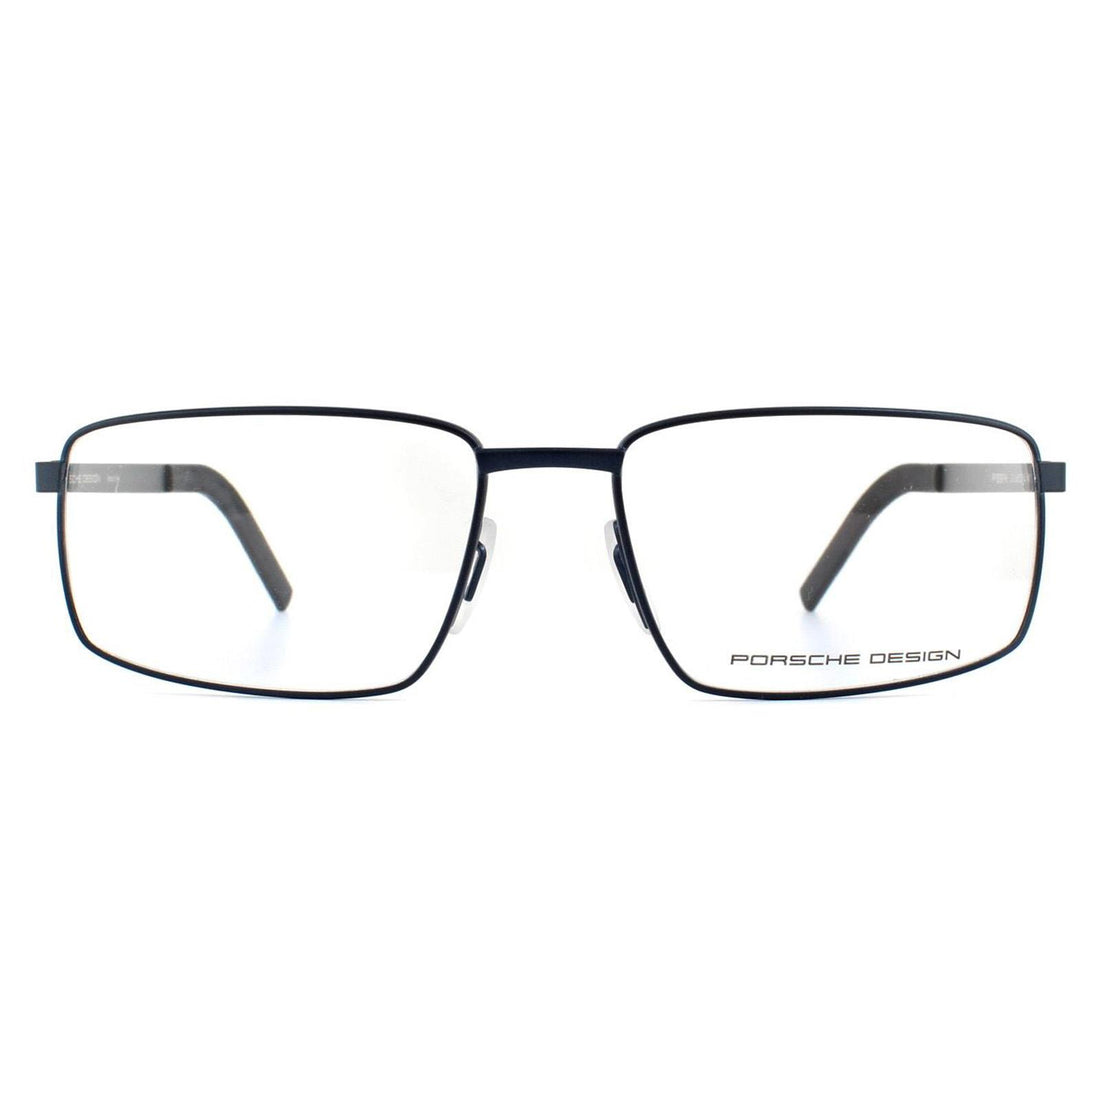 Porsche Design P8314 Glasses Frames Blue